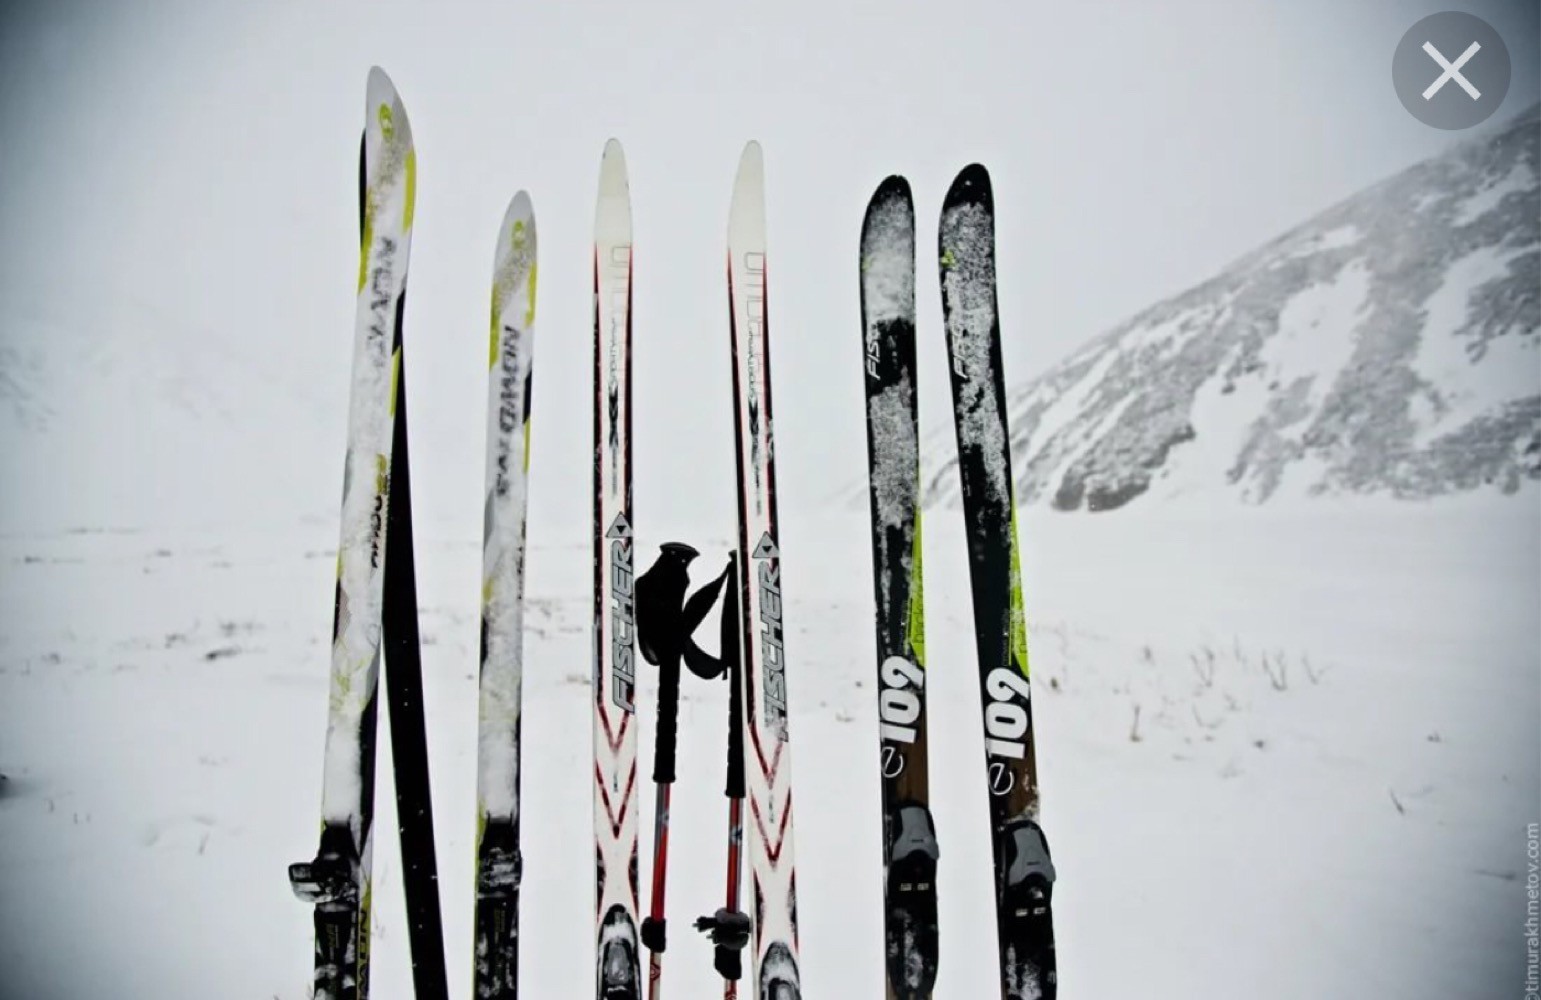 How to ski. Горные лыжи Фишер. Туристские лыжи. Насечки на туристические лыжи. Лыжный туризм лыжи.